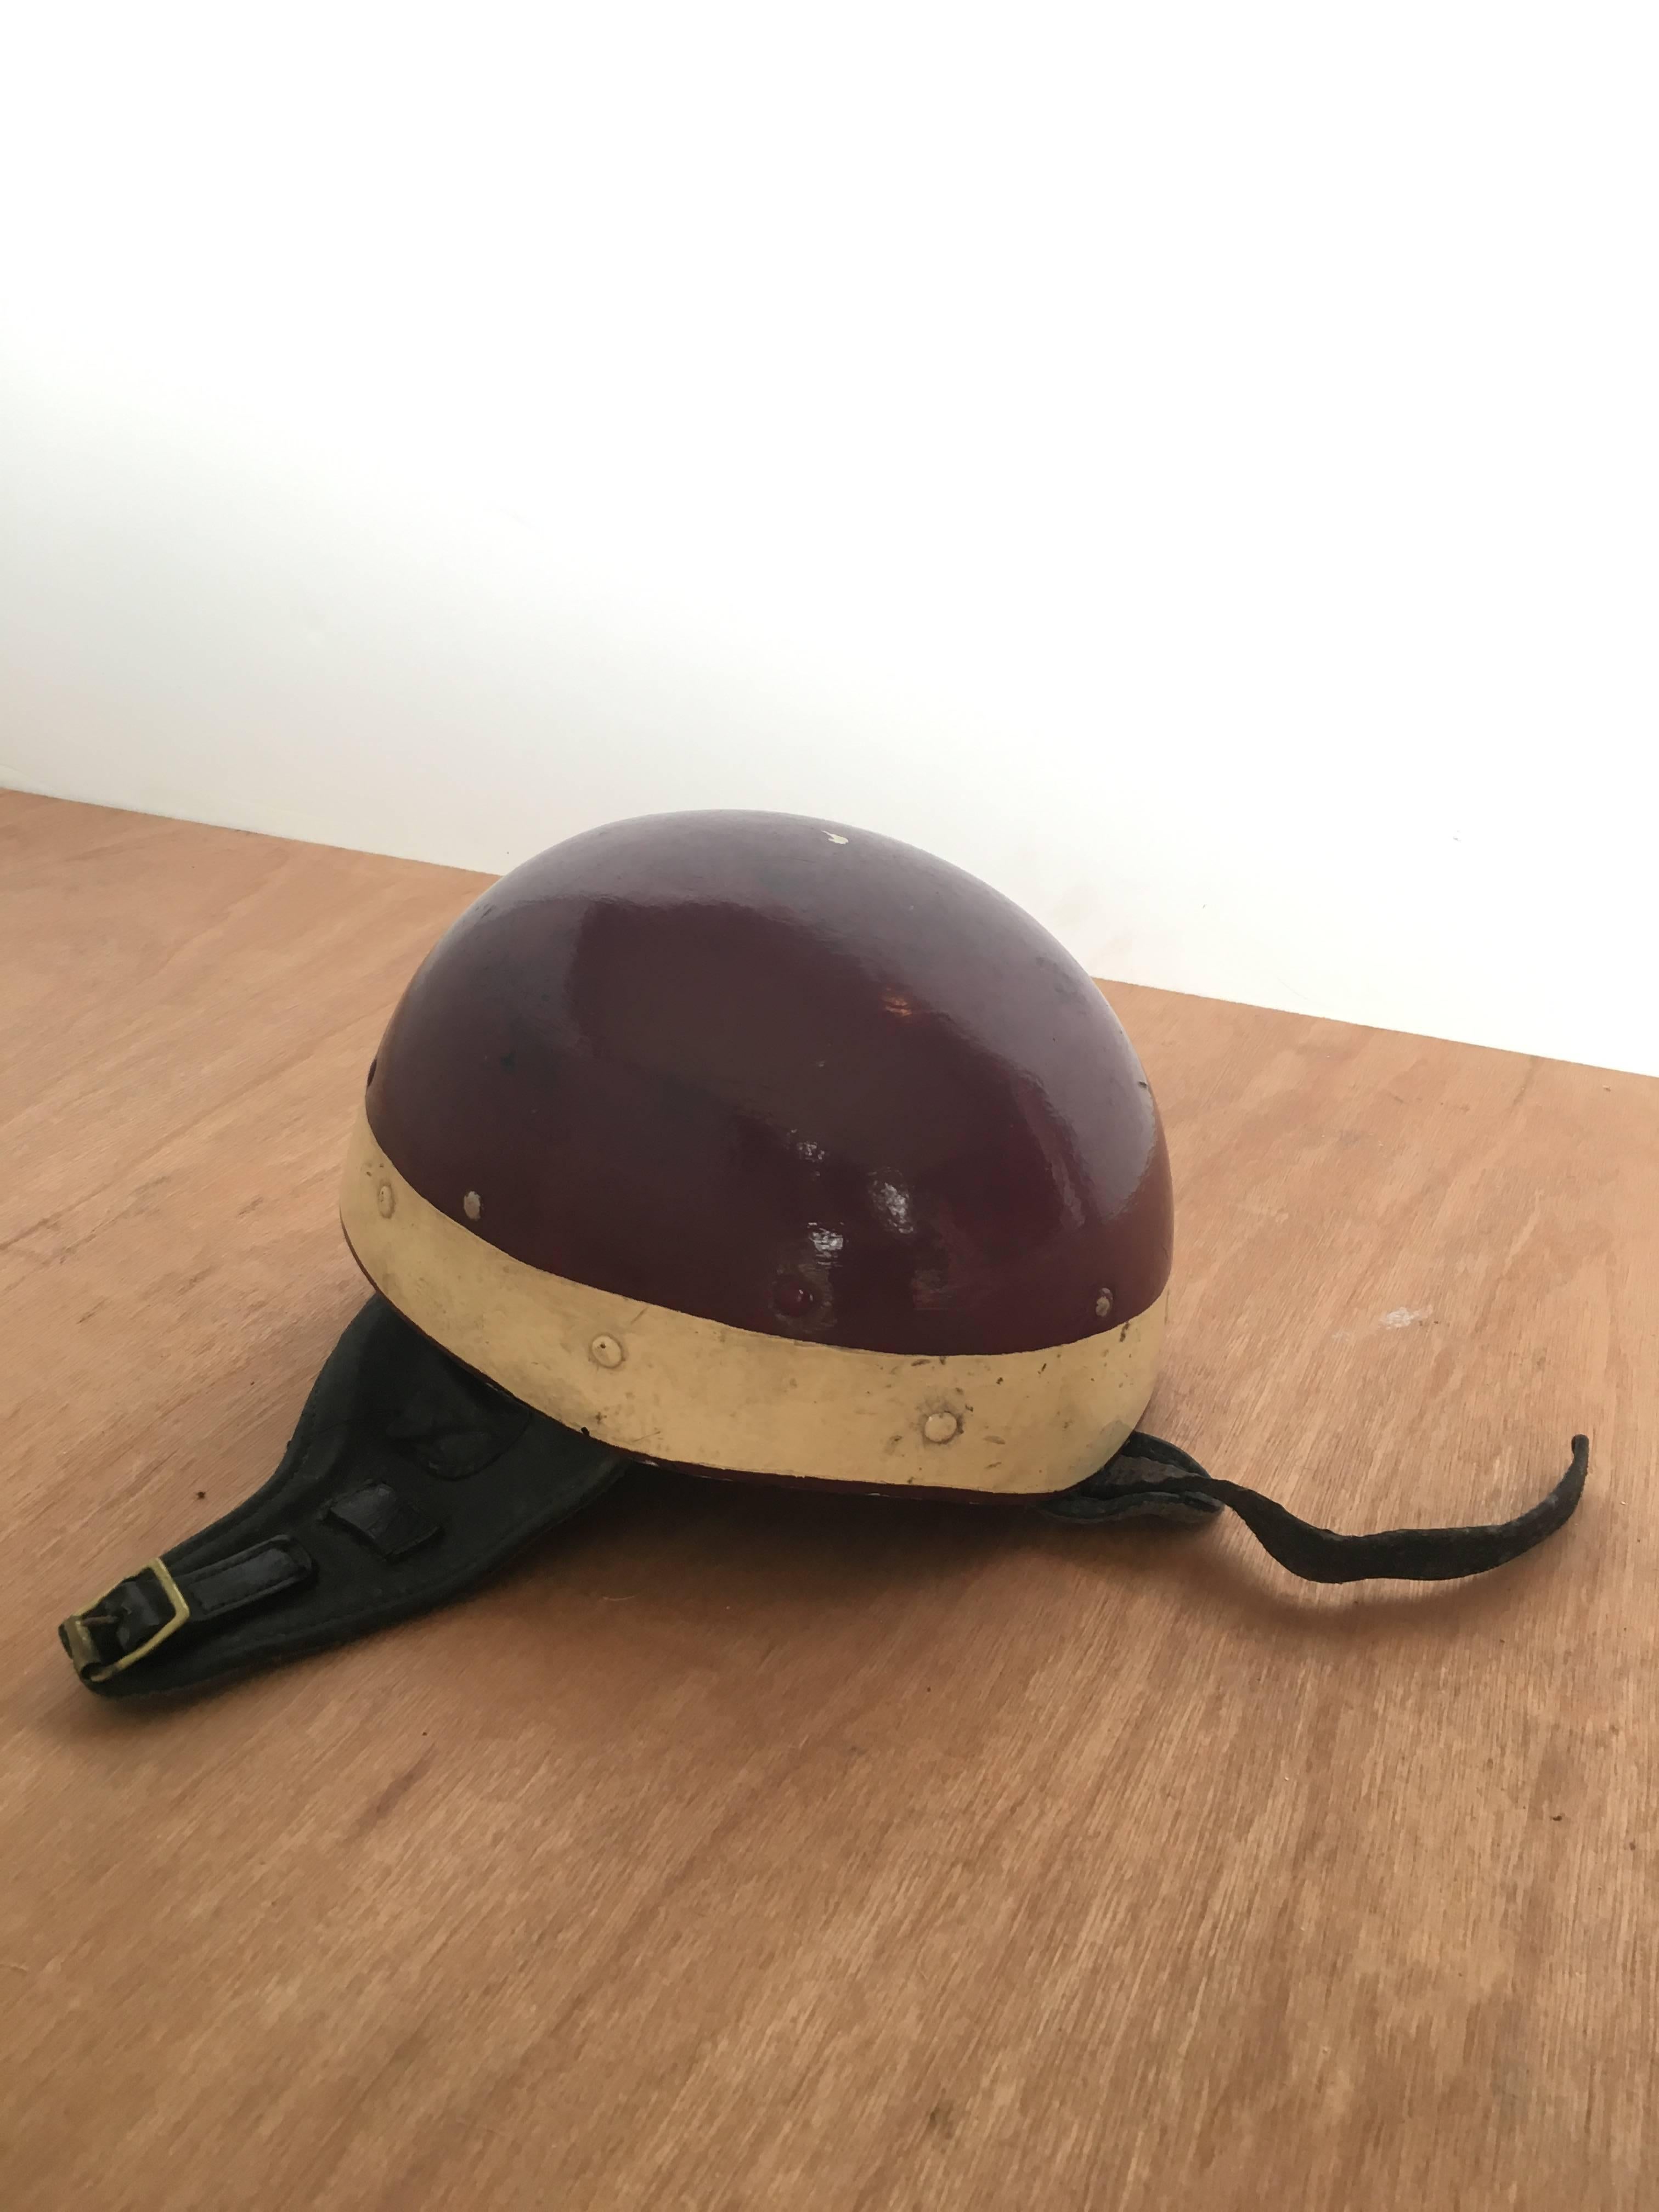 Vintage burgundy riding helmet with chin strap.